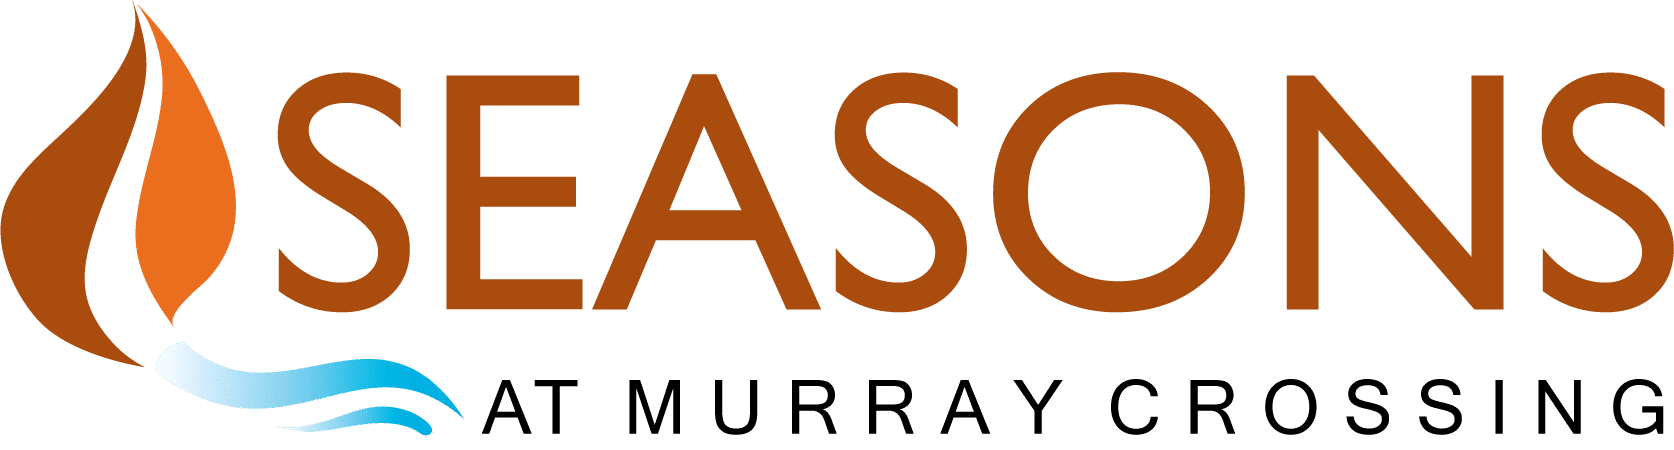 Seasons at Murray Crossing logo